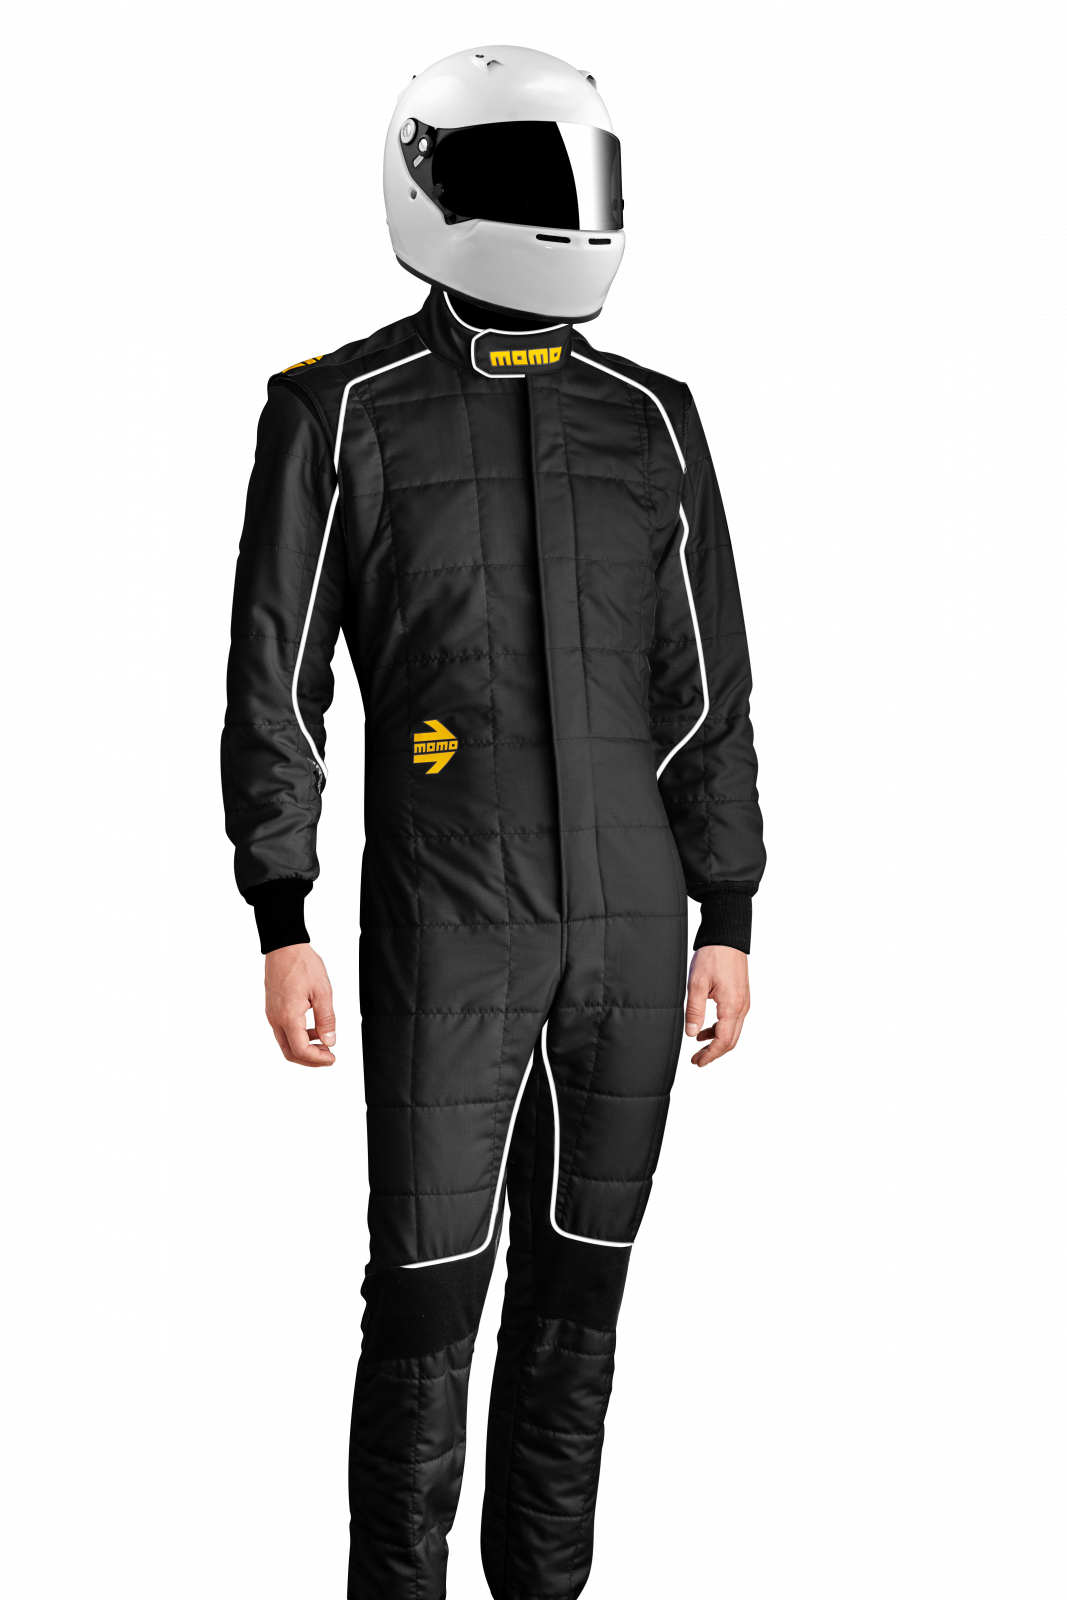 MOMO Corsa Evo Black Size 54 Racing Suit TUCOEVOBLK54